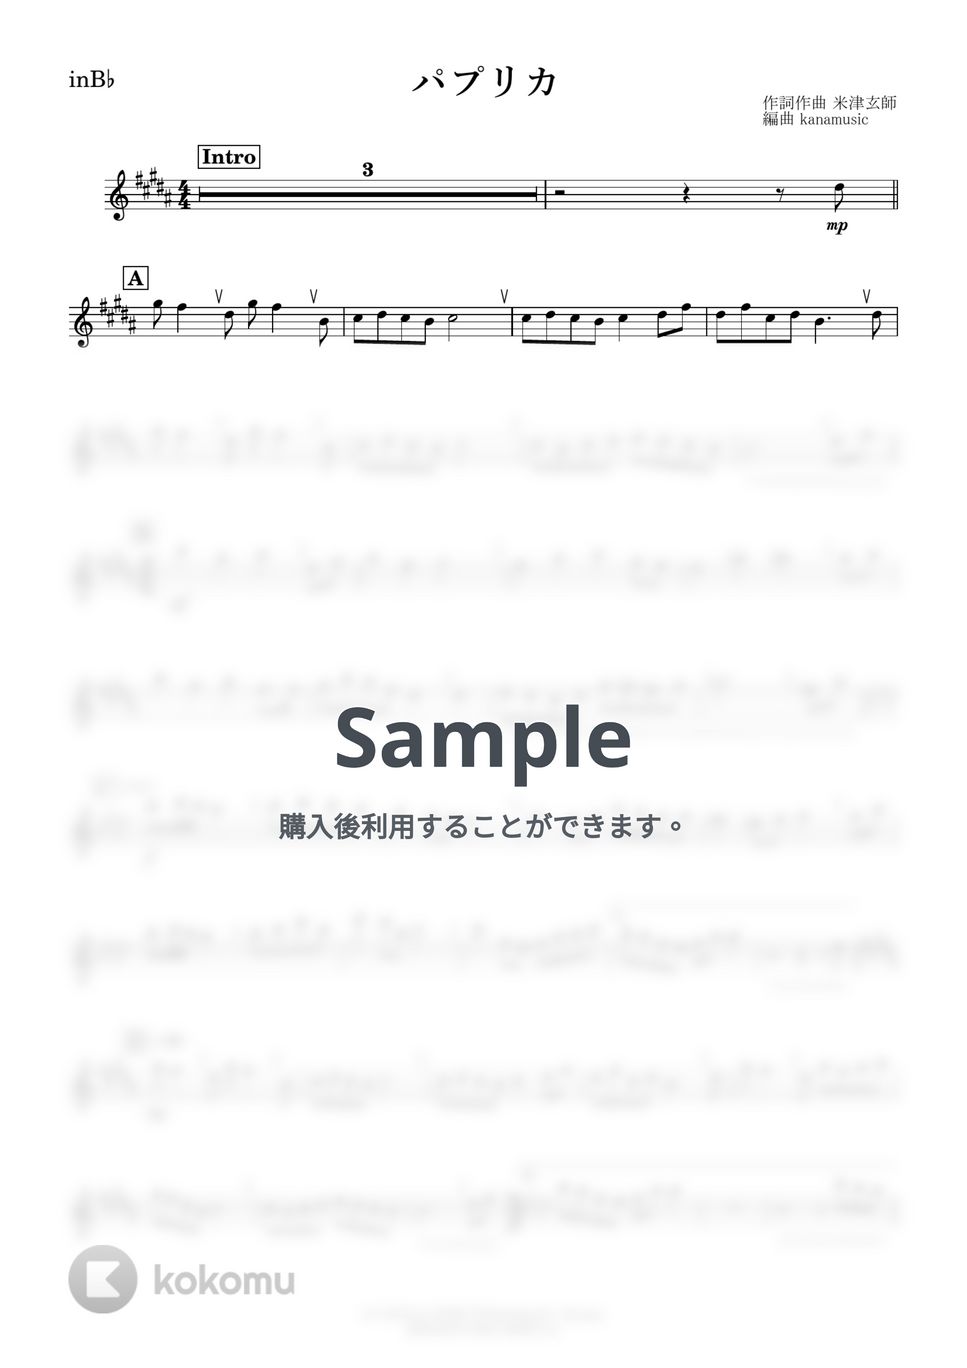 Foorin - パプリカ (B♭) by kanamusic